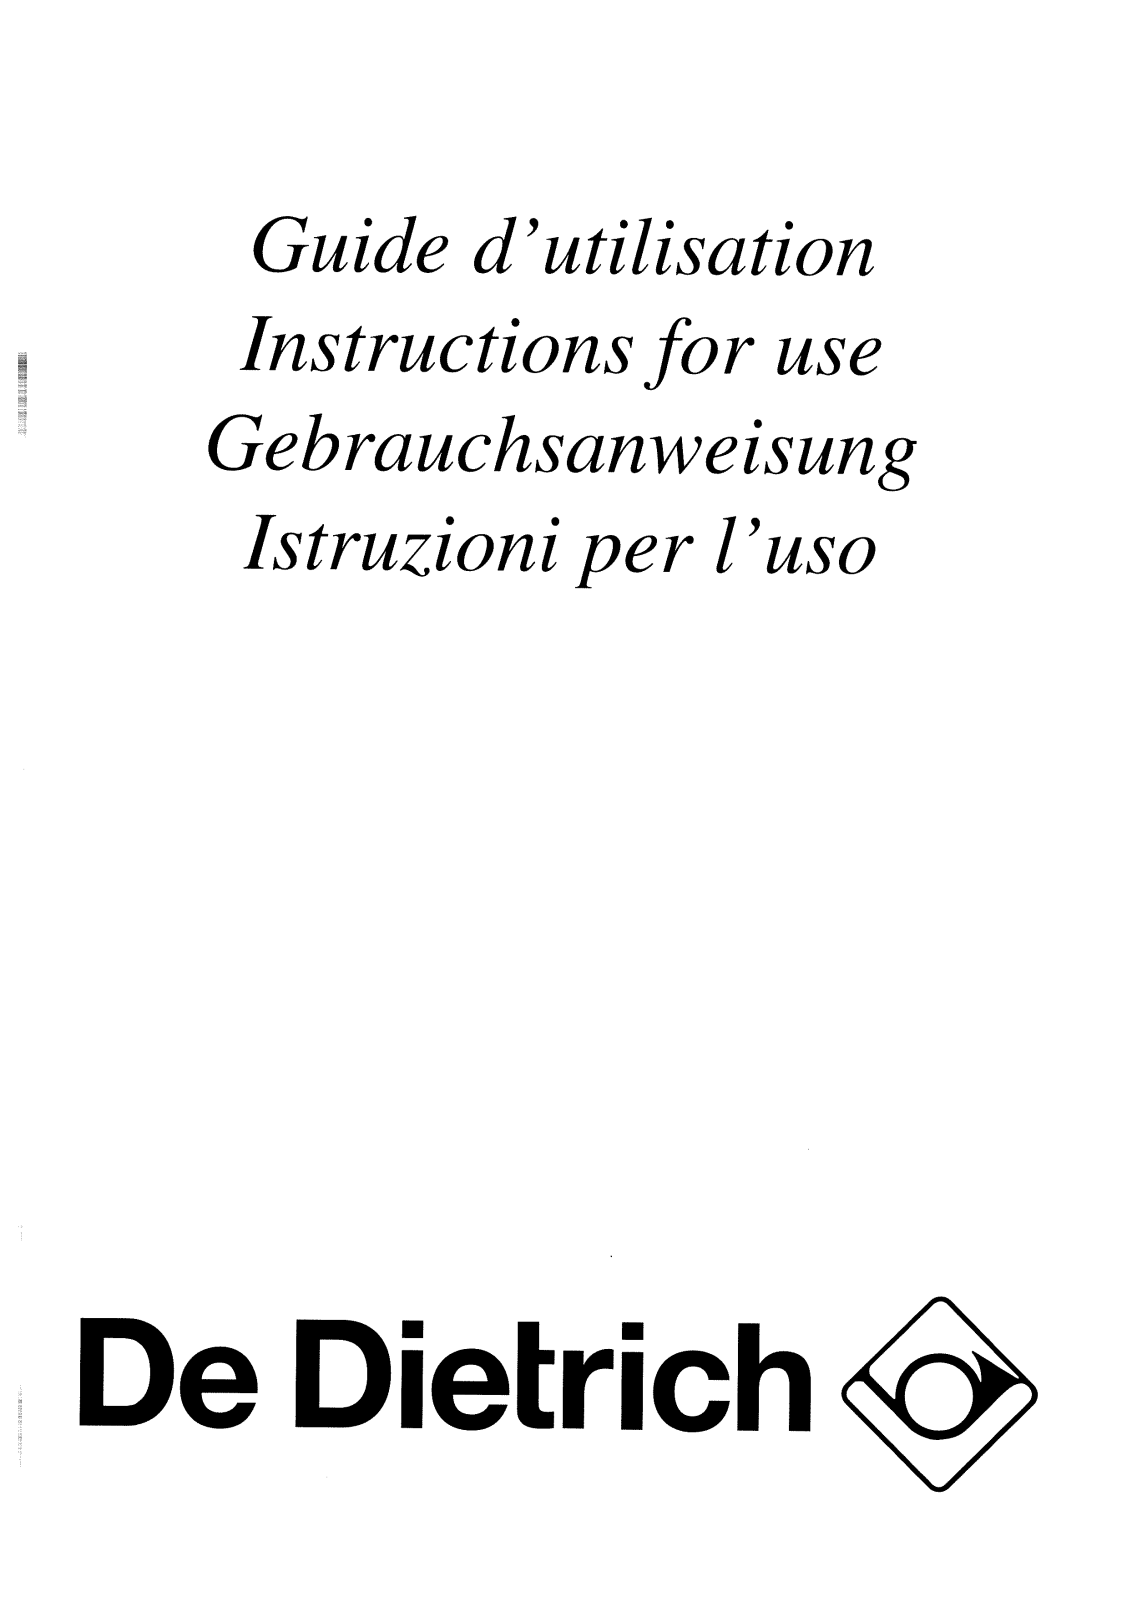 De dietrich HM2894E1 User Manual